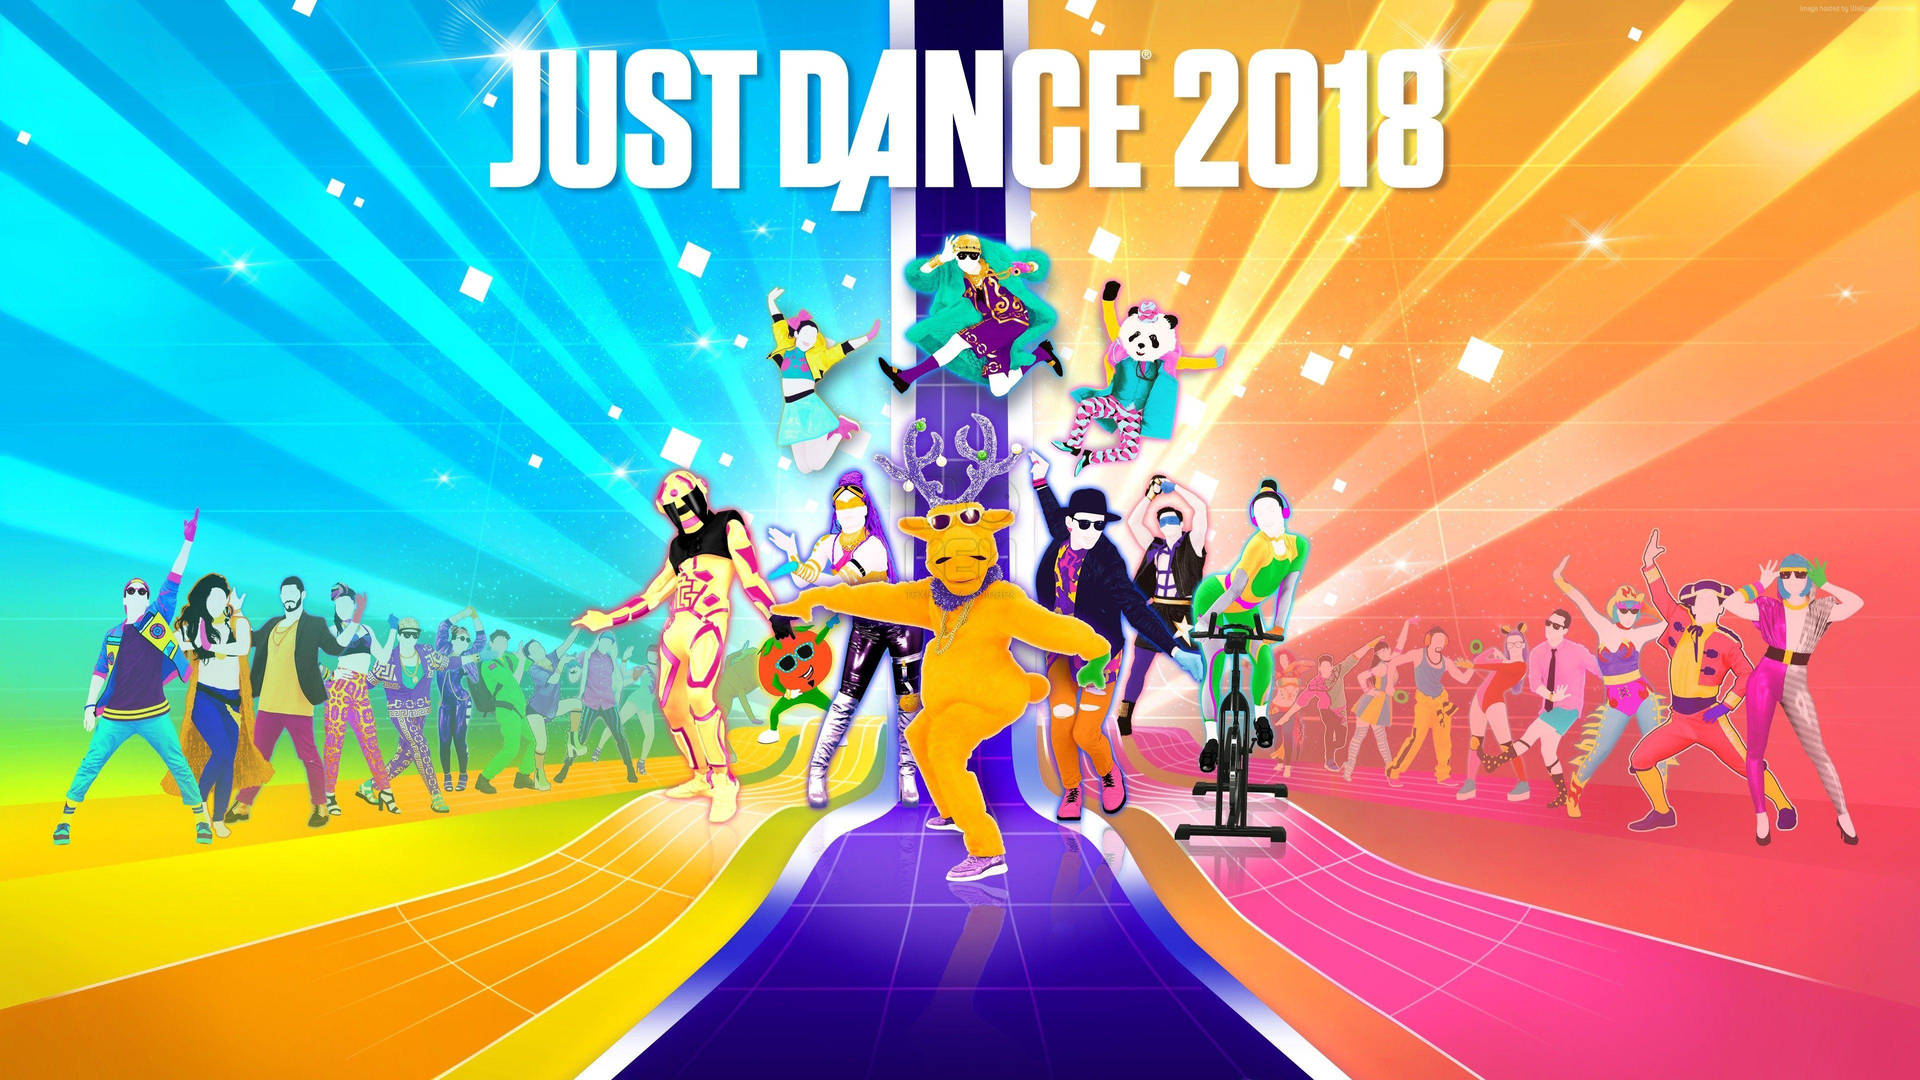 Just Dance 2018 Runway Poster Background